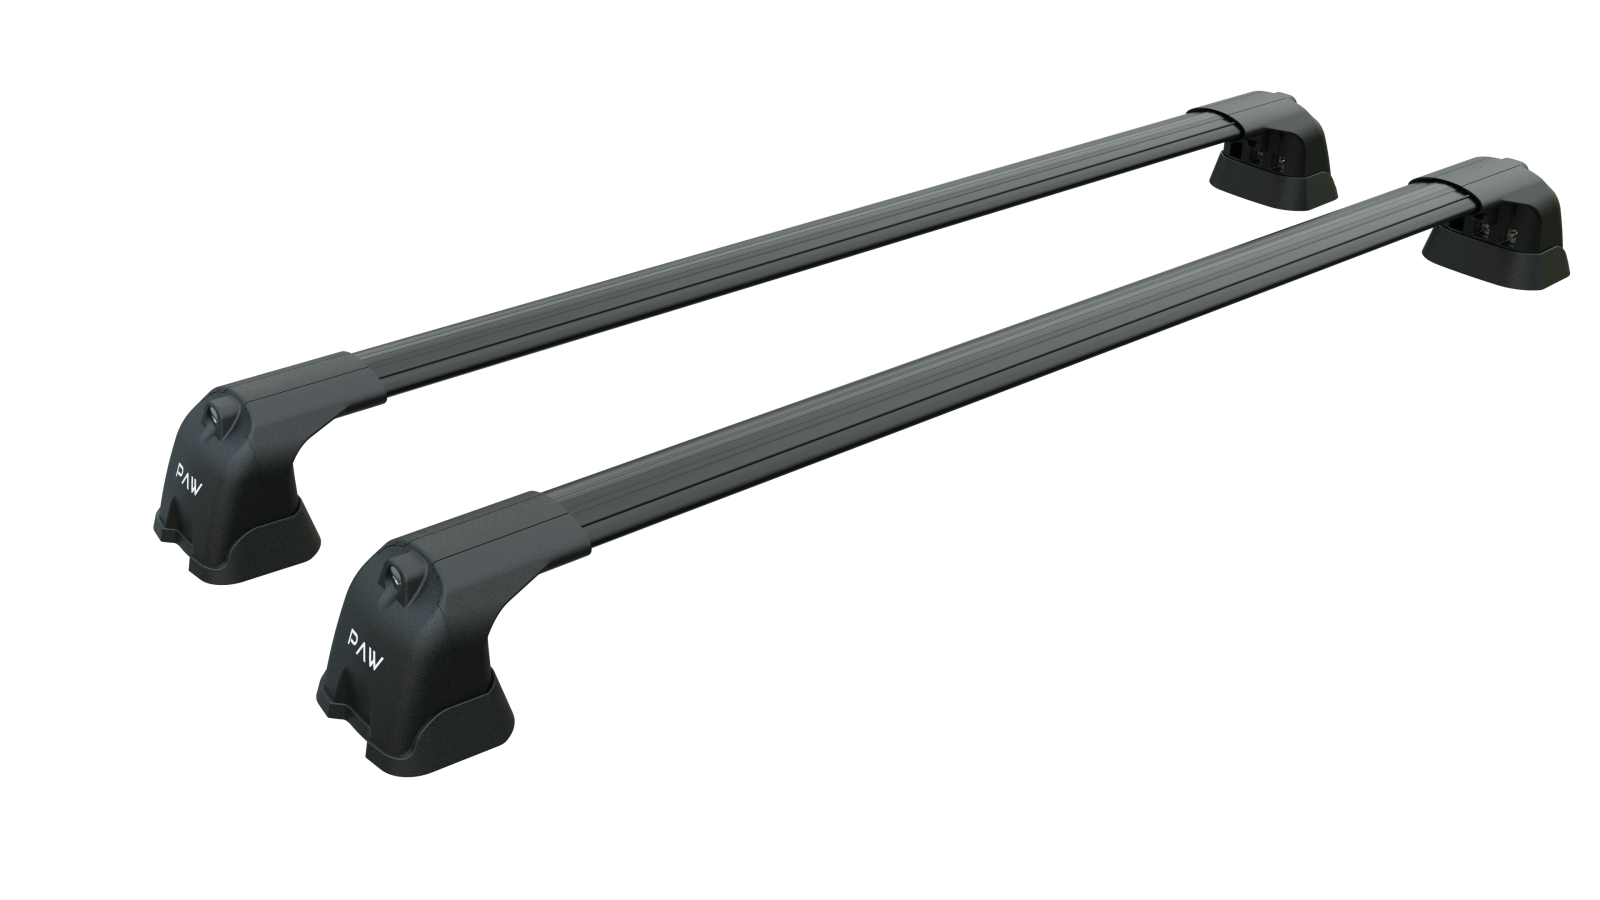 For Peugeot 5008 2010-2017 Roof Rack System Carrier Cross Bars Aluminum Lockable High Quality of Metal Bracket Black